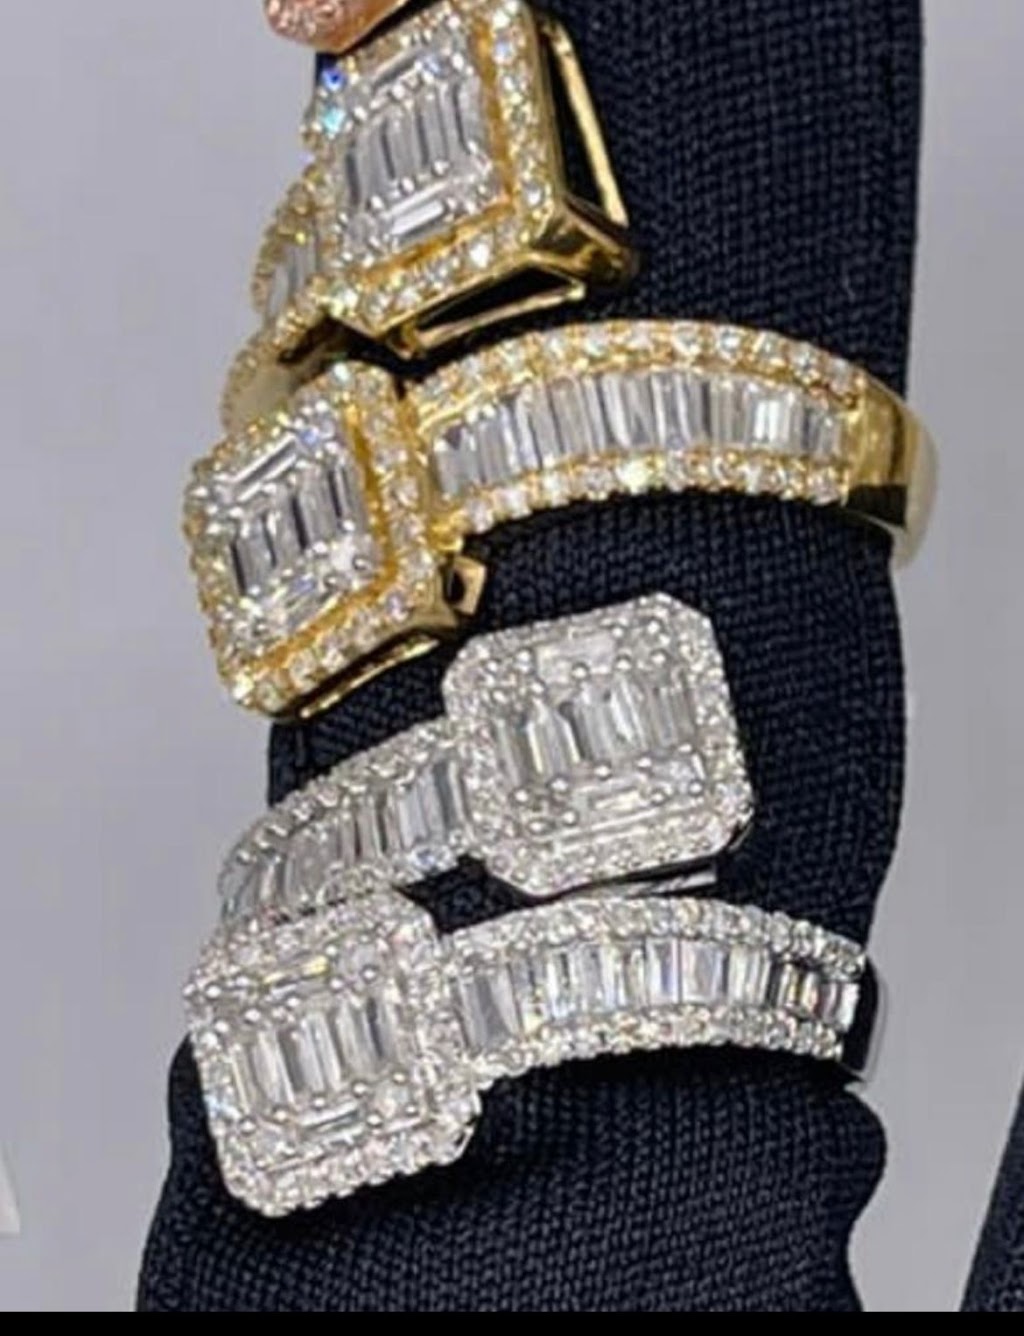 Gold&diamond Trading/ G&D Jewelry/pawnshop | 15 Frank E Rodgers Blvd N, Harrison, NJ 07029 | Phone: (973) 484-3000